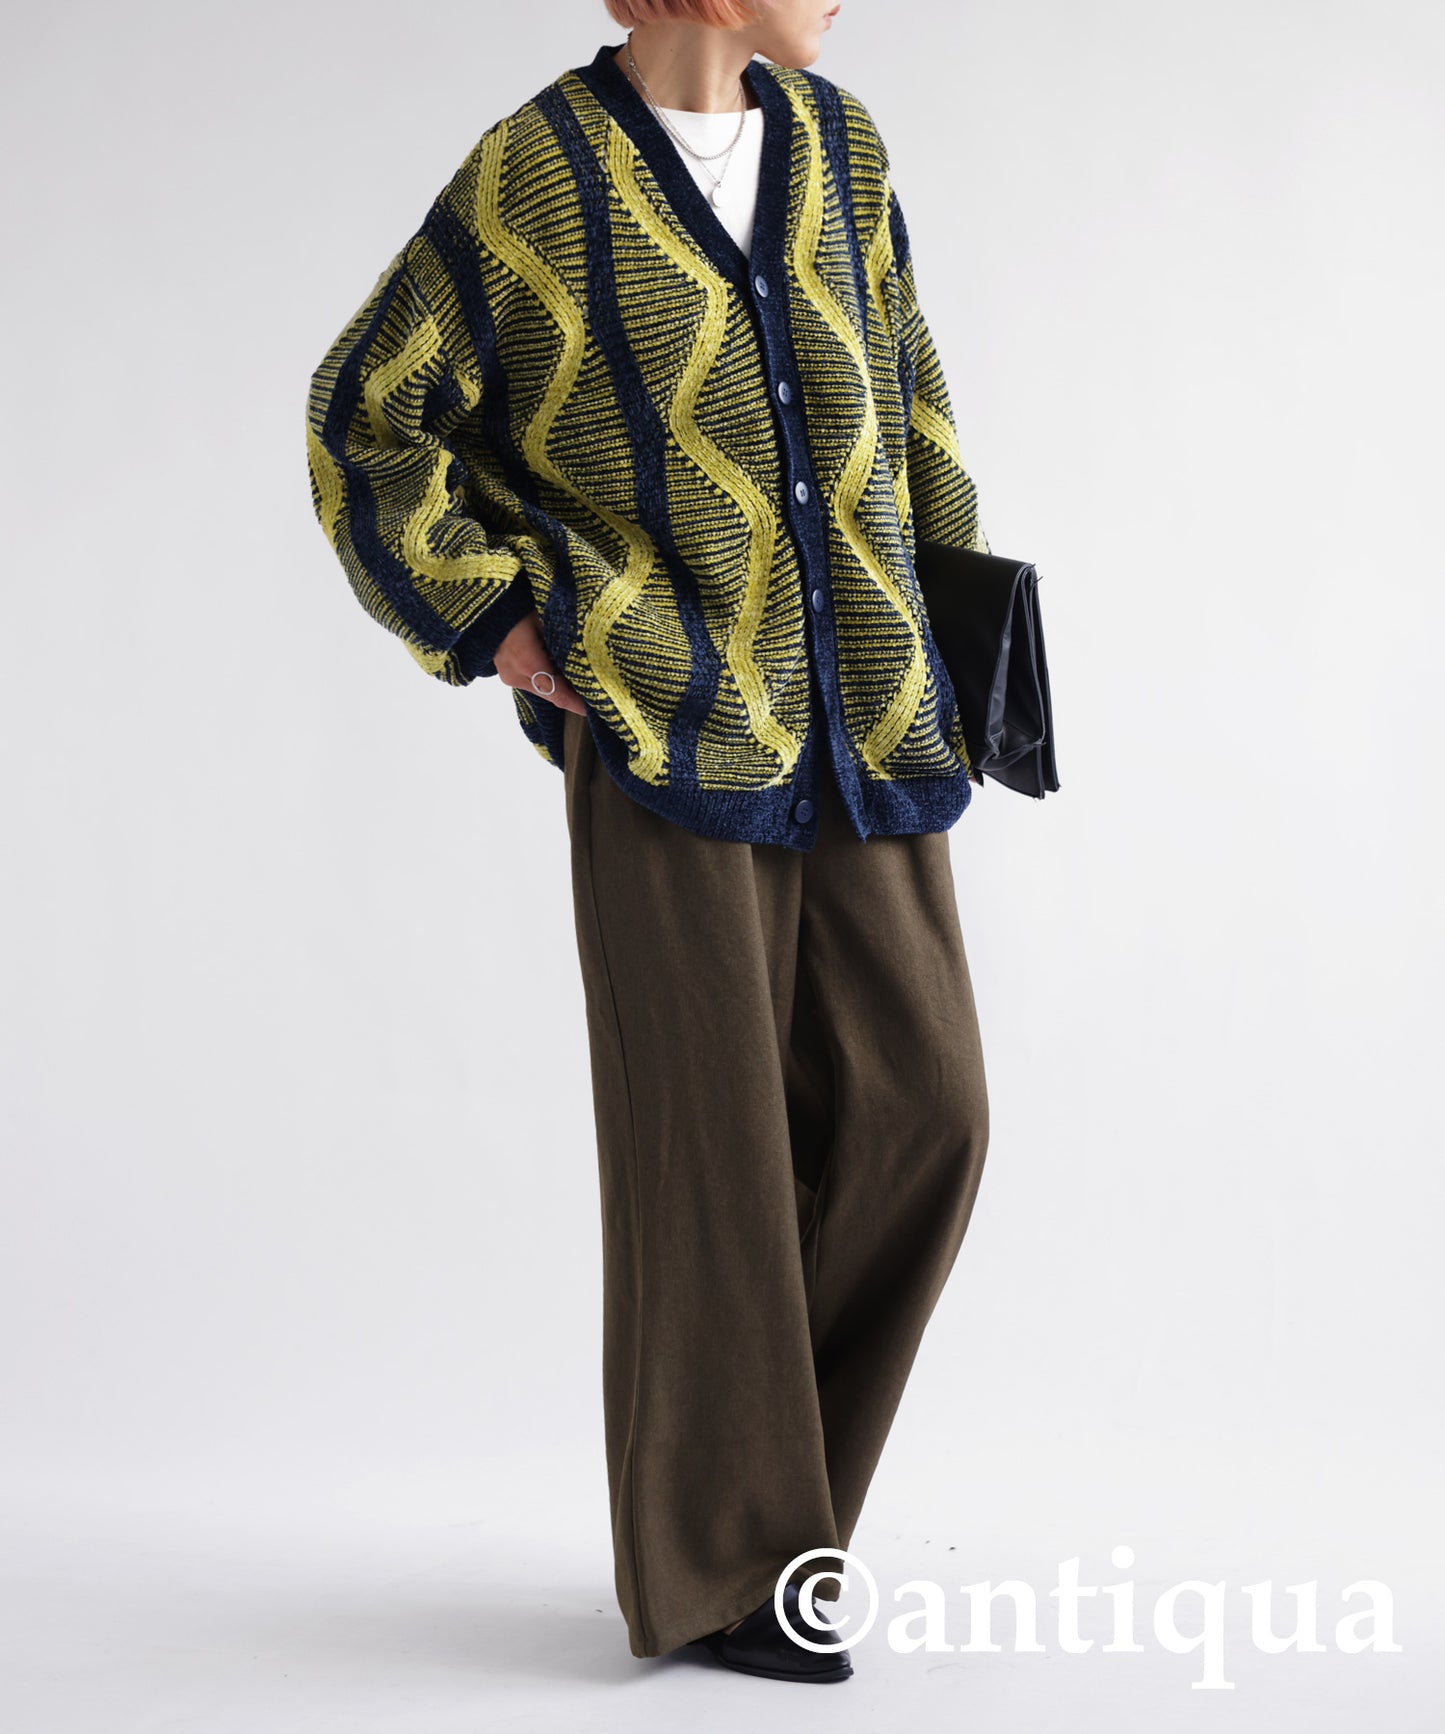 Patterned Knit Cardigan Ladies